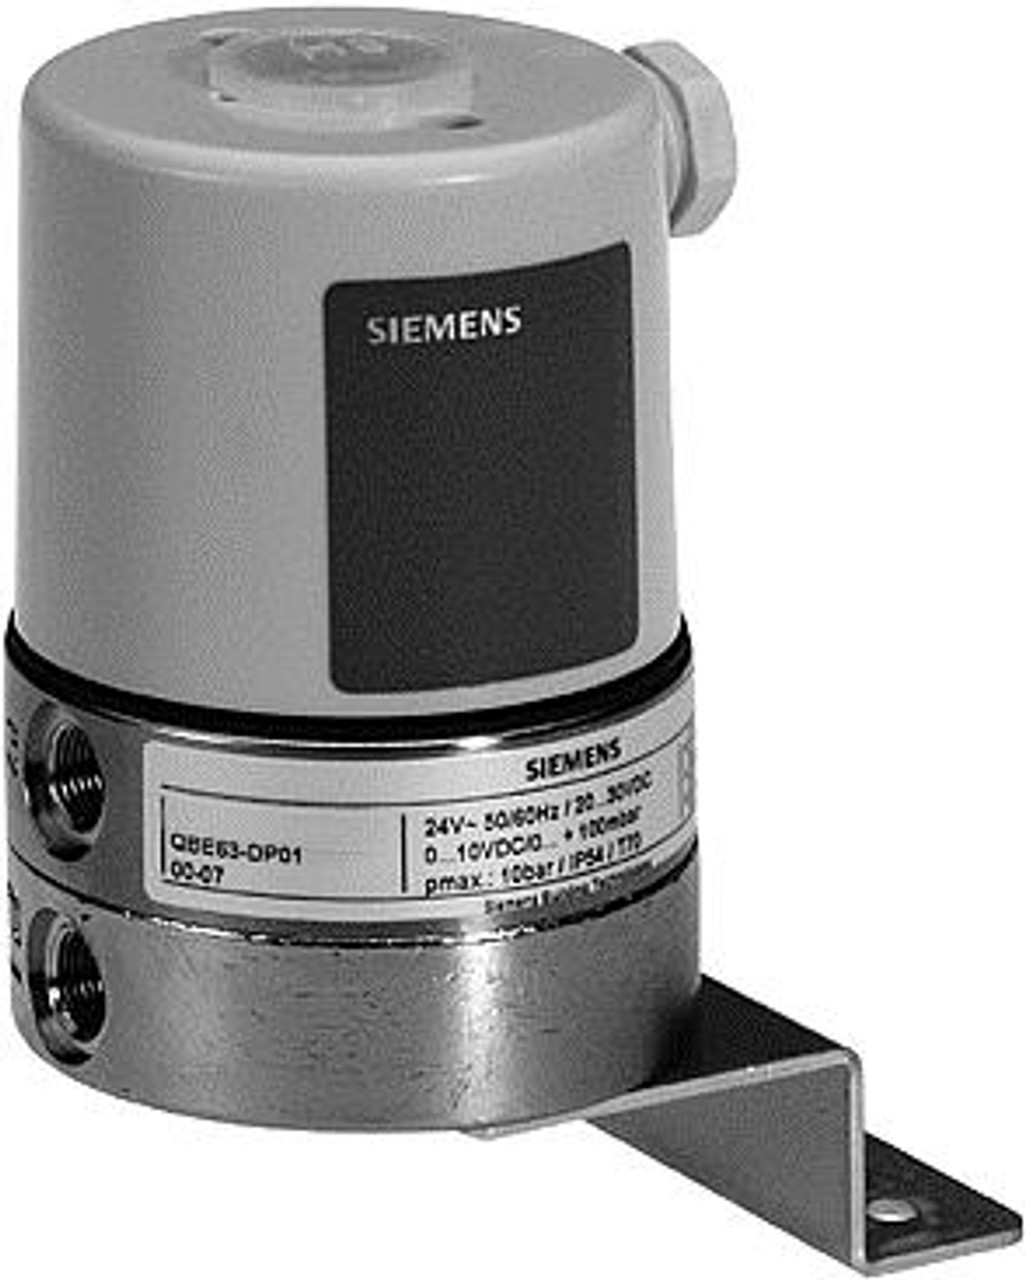 Siemens QBE63-DP1 Differential pressure sensor for liquids and gases (DC 0Ã¢â‚¬Â¦10 V) 0Ã¢â‚¬Â¦100 kPa